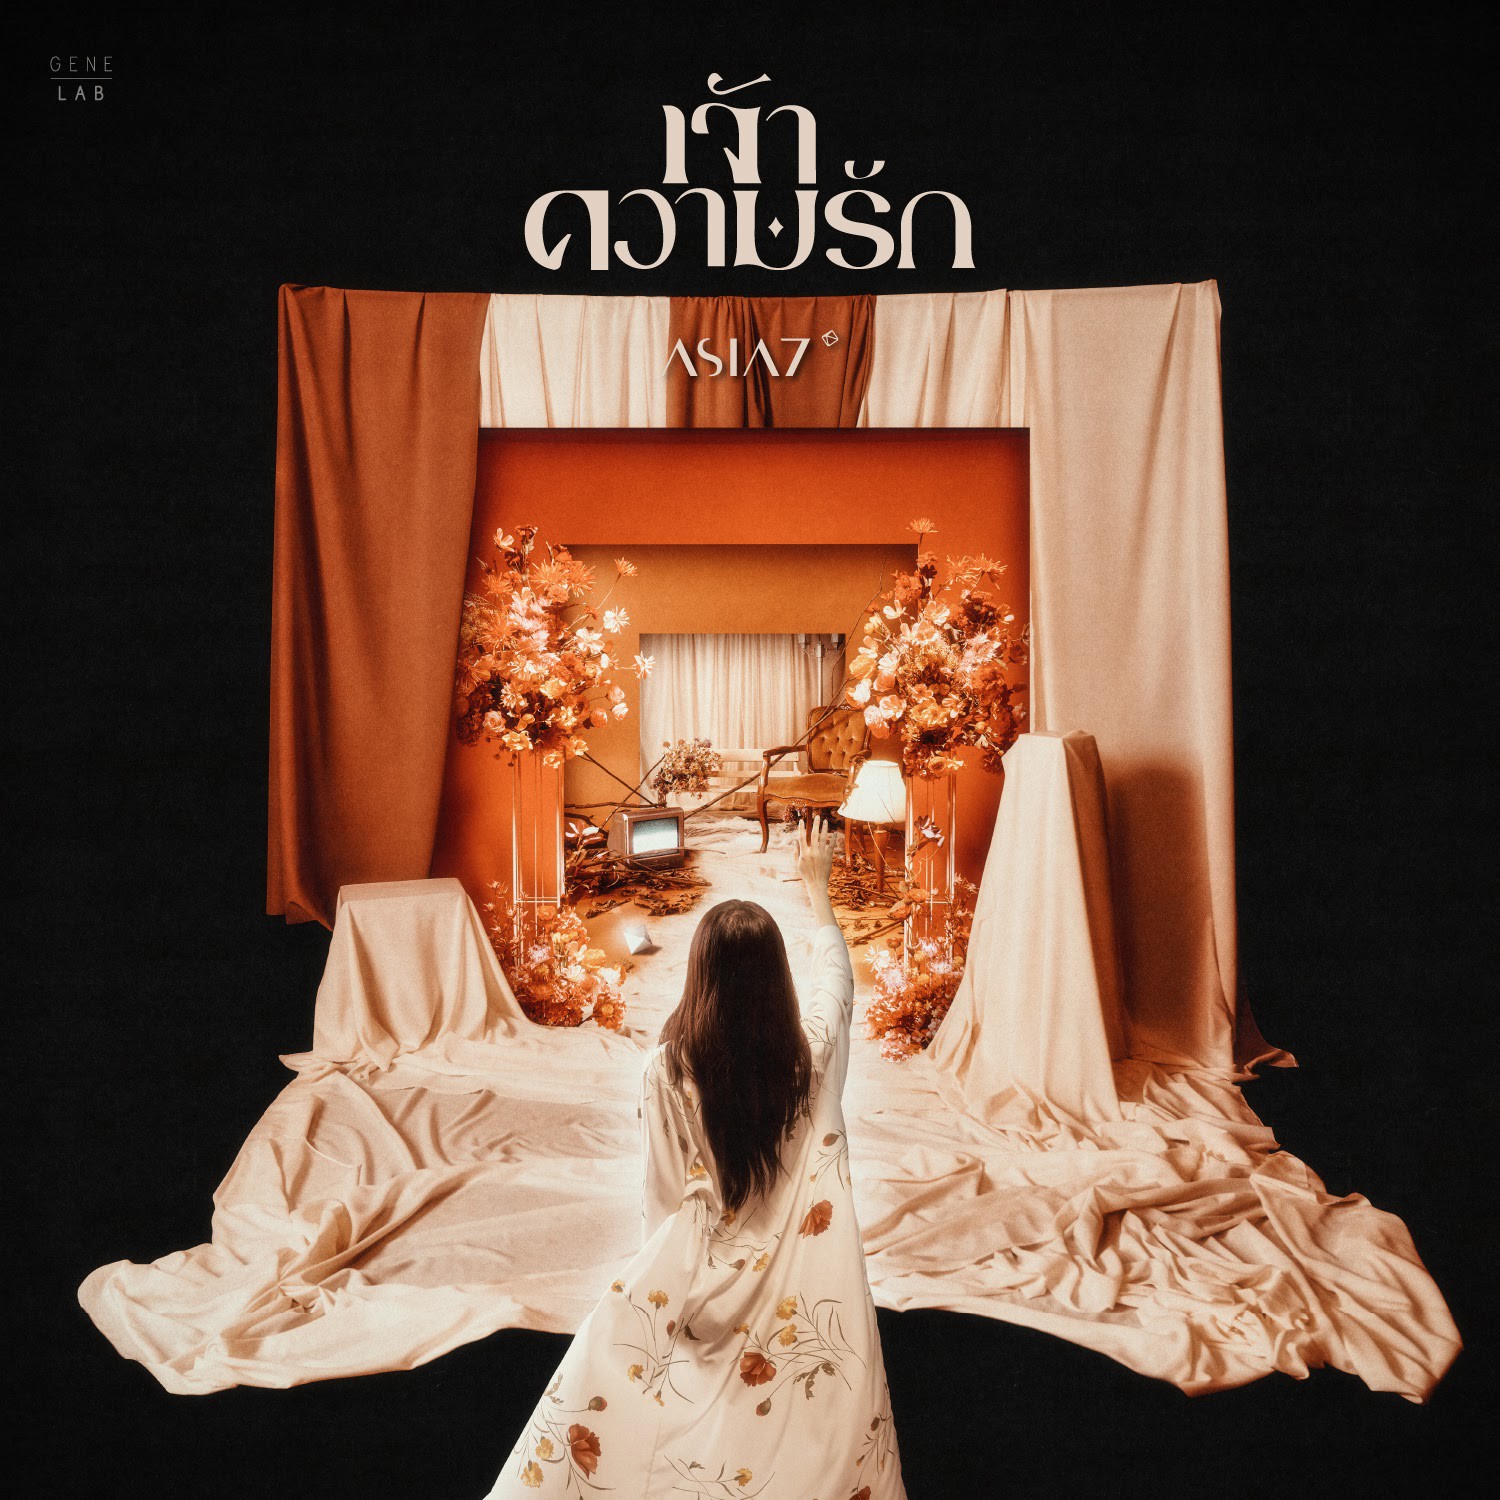 ASIA7 - เจ้าความรัก (Yearning) Cover